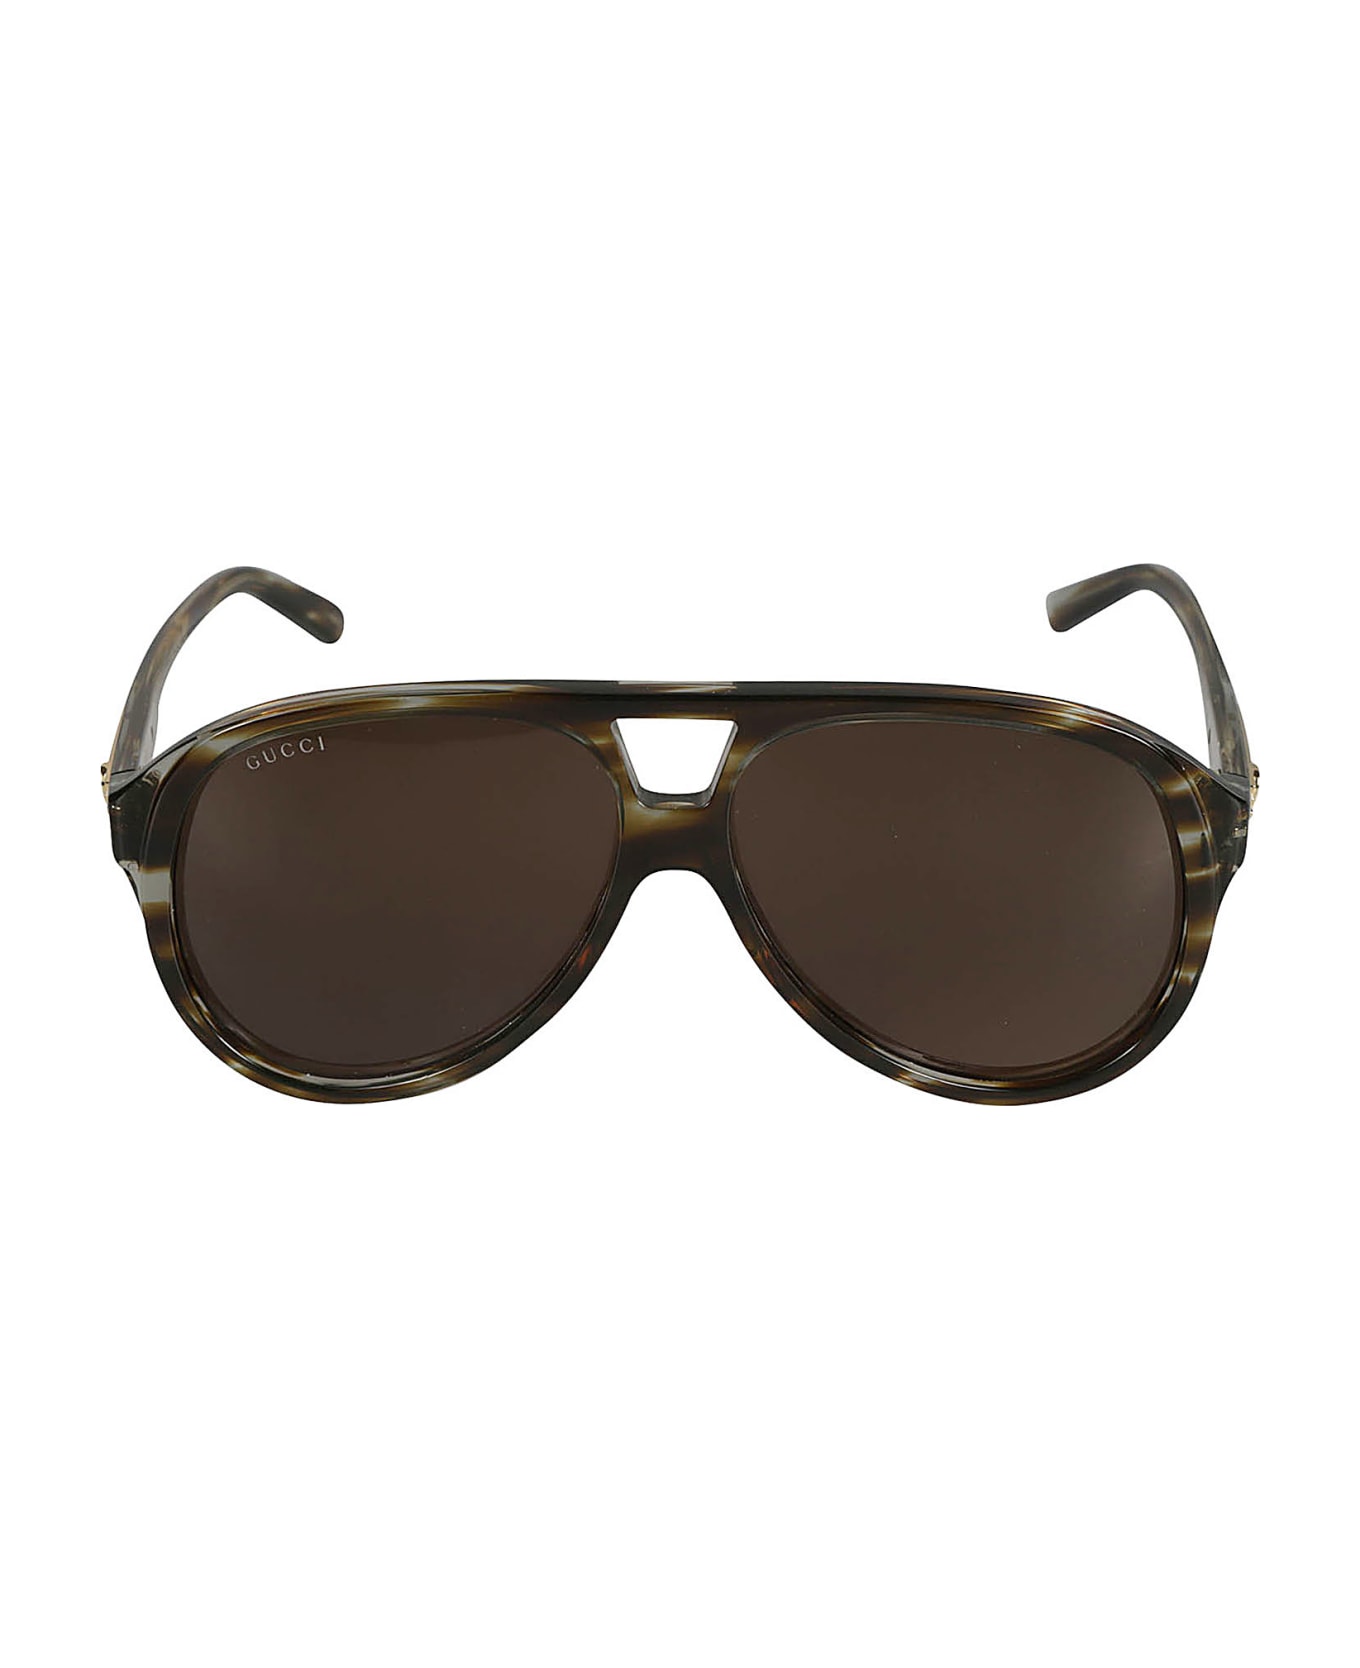 Gucci Eyewear Aviator Thick Sunglasses - Brown